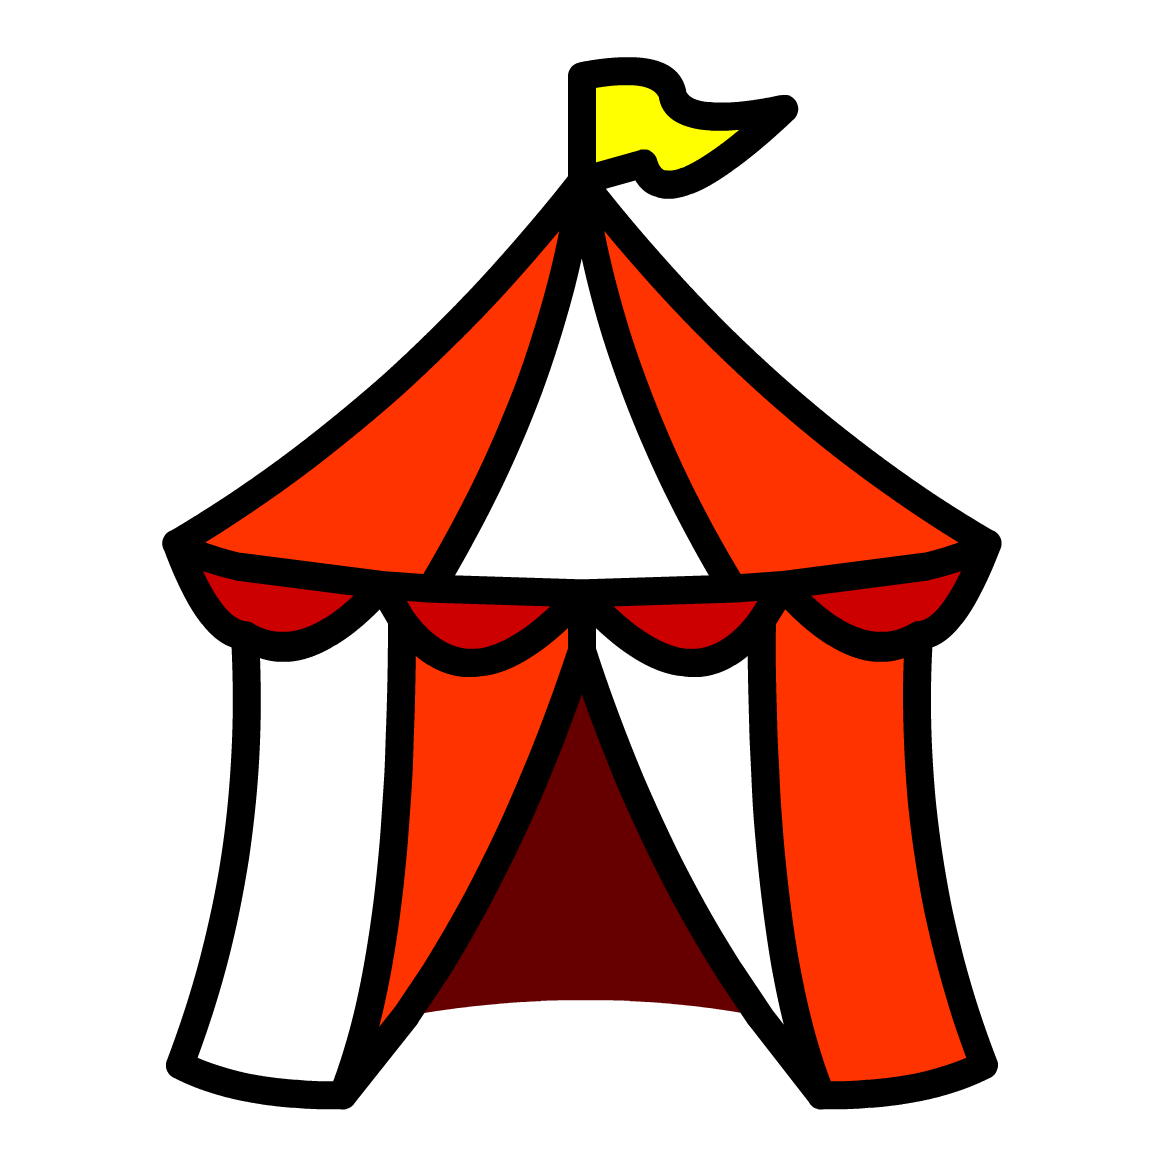 Circus Tent Clip Art Image - 